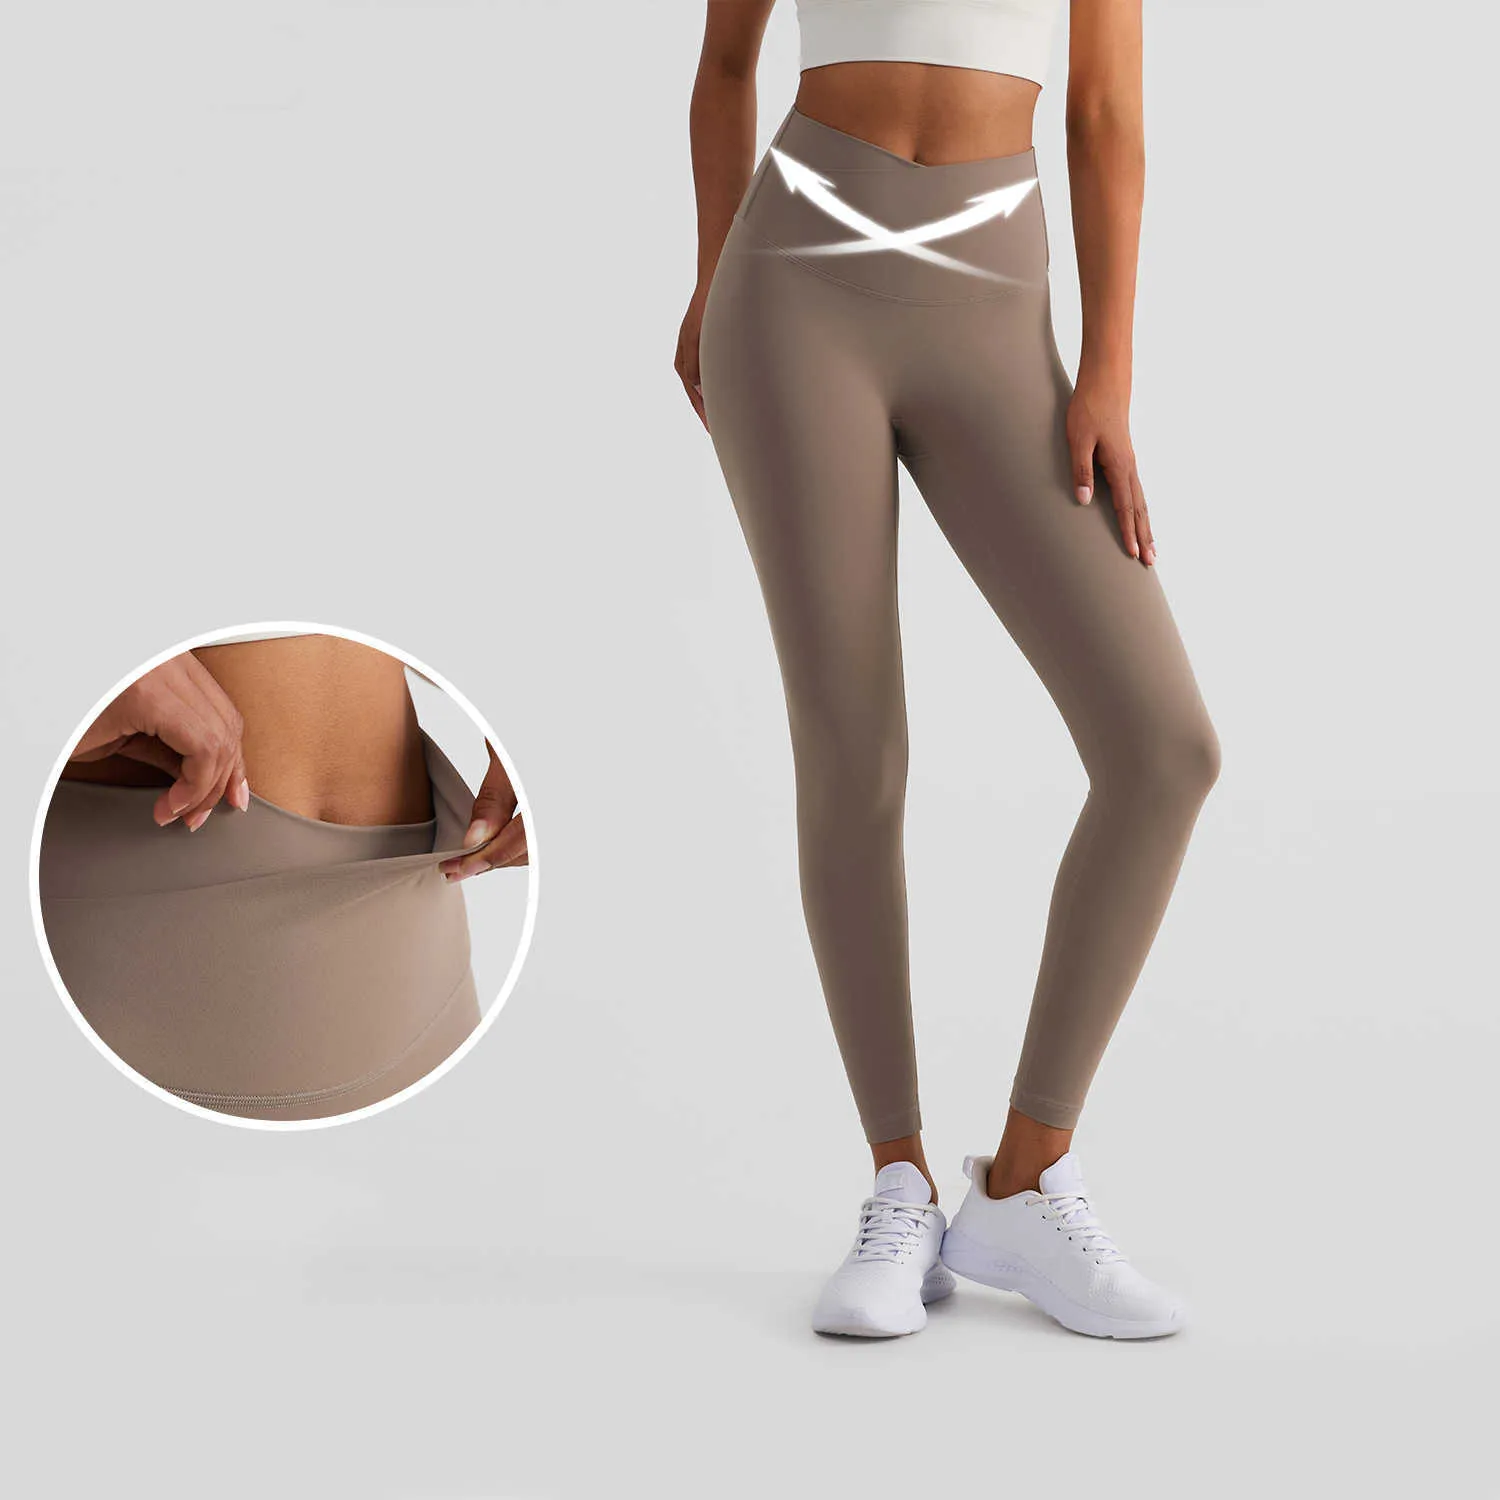 Lu Lu Lemon Push Up Leggings For Women Yoga, Gym, Running, And